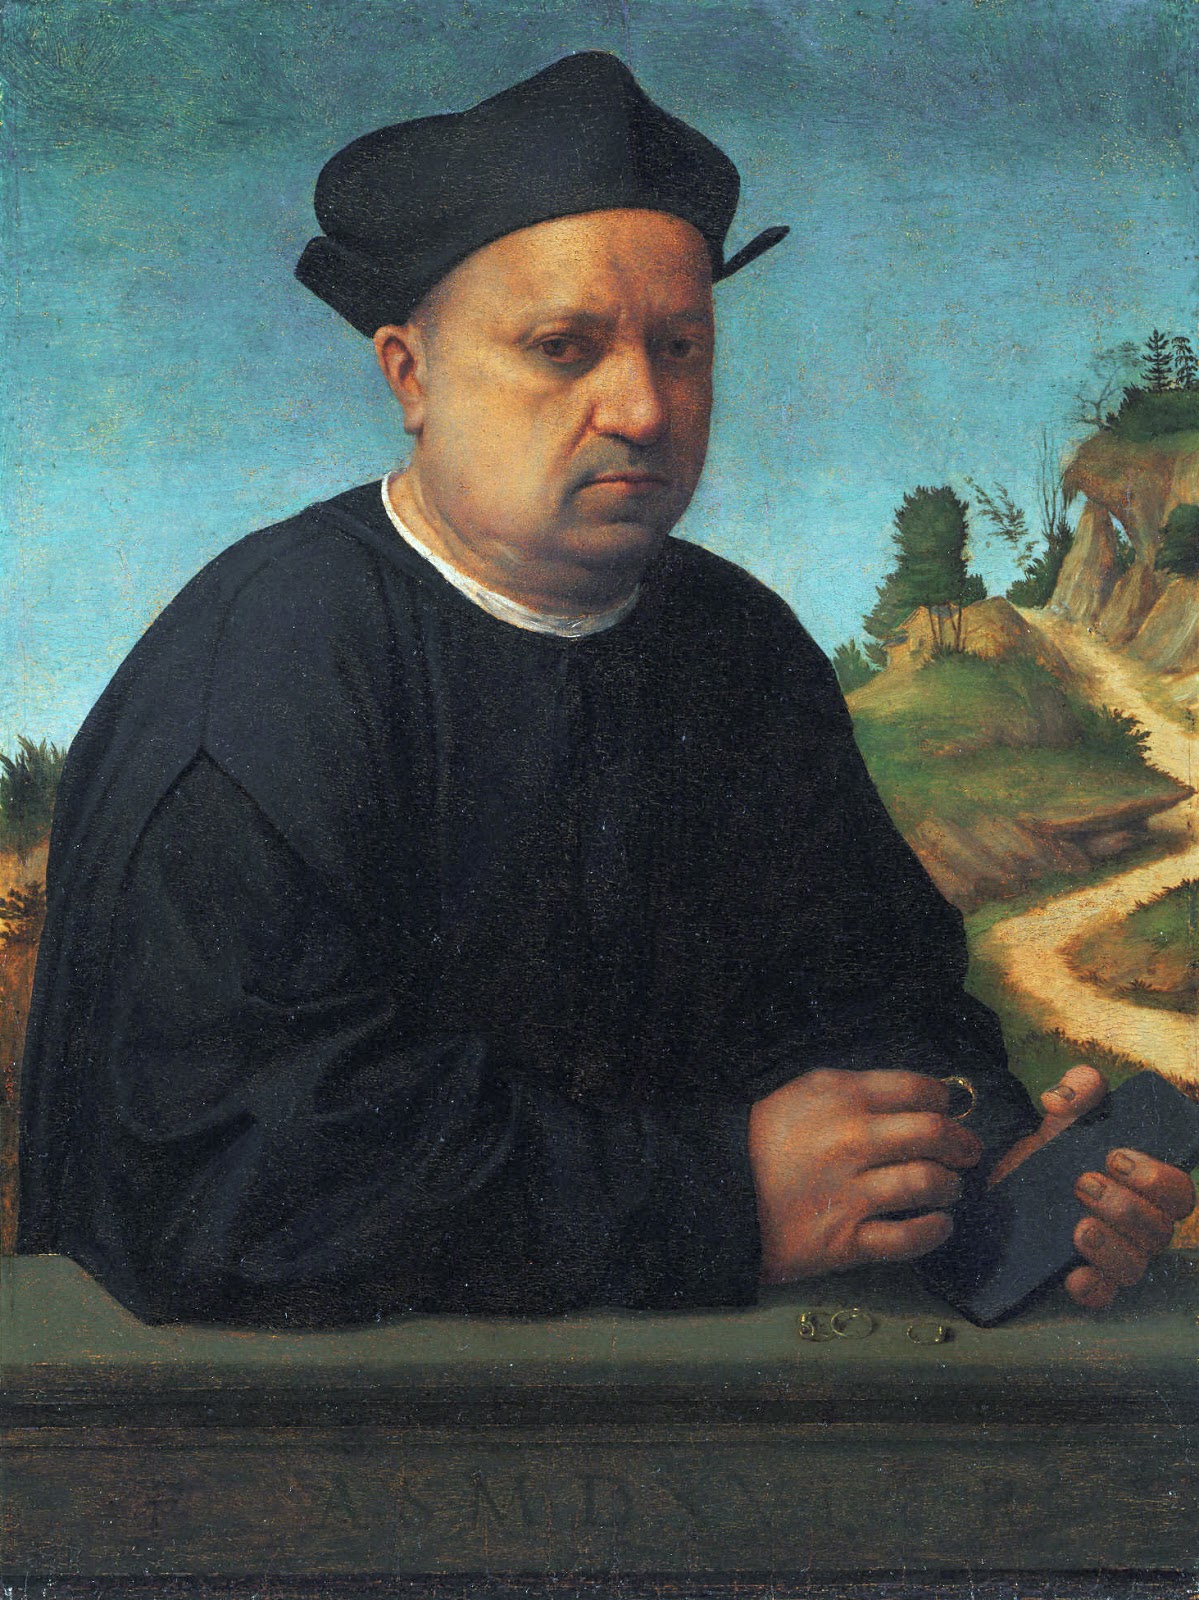 Franciabigio-1482-1525 (5).jpg